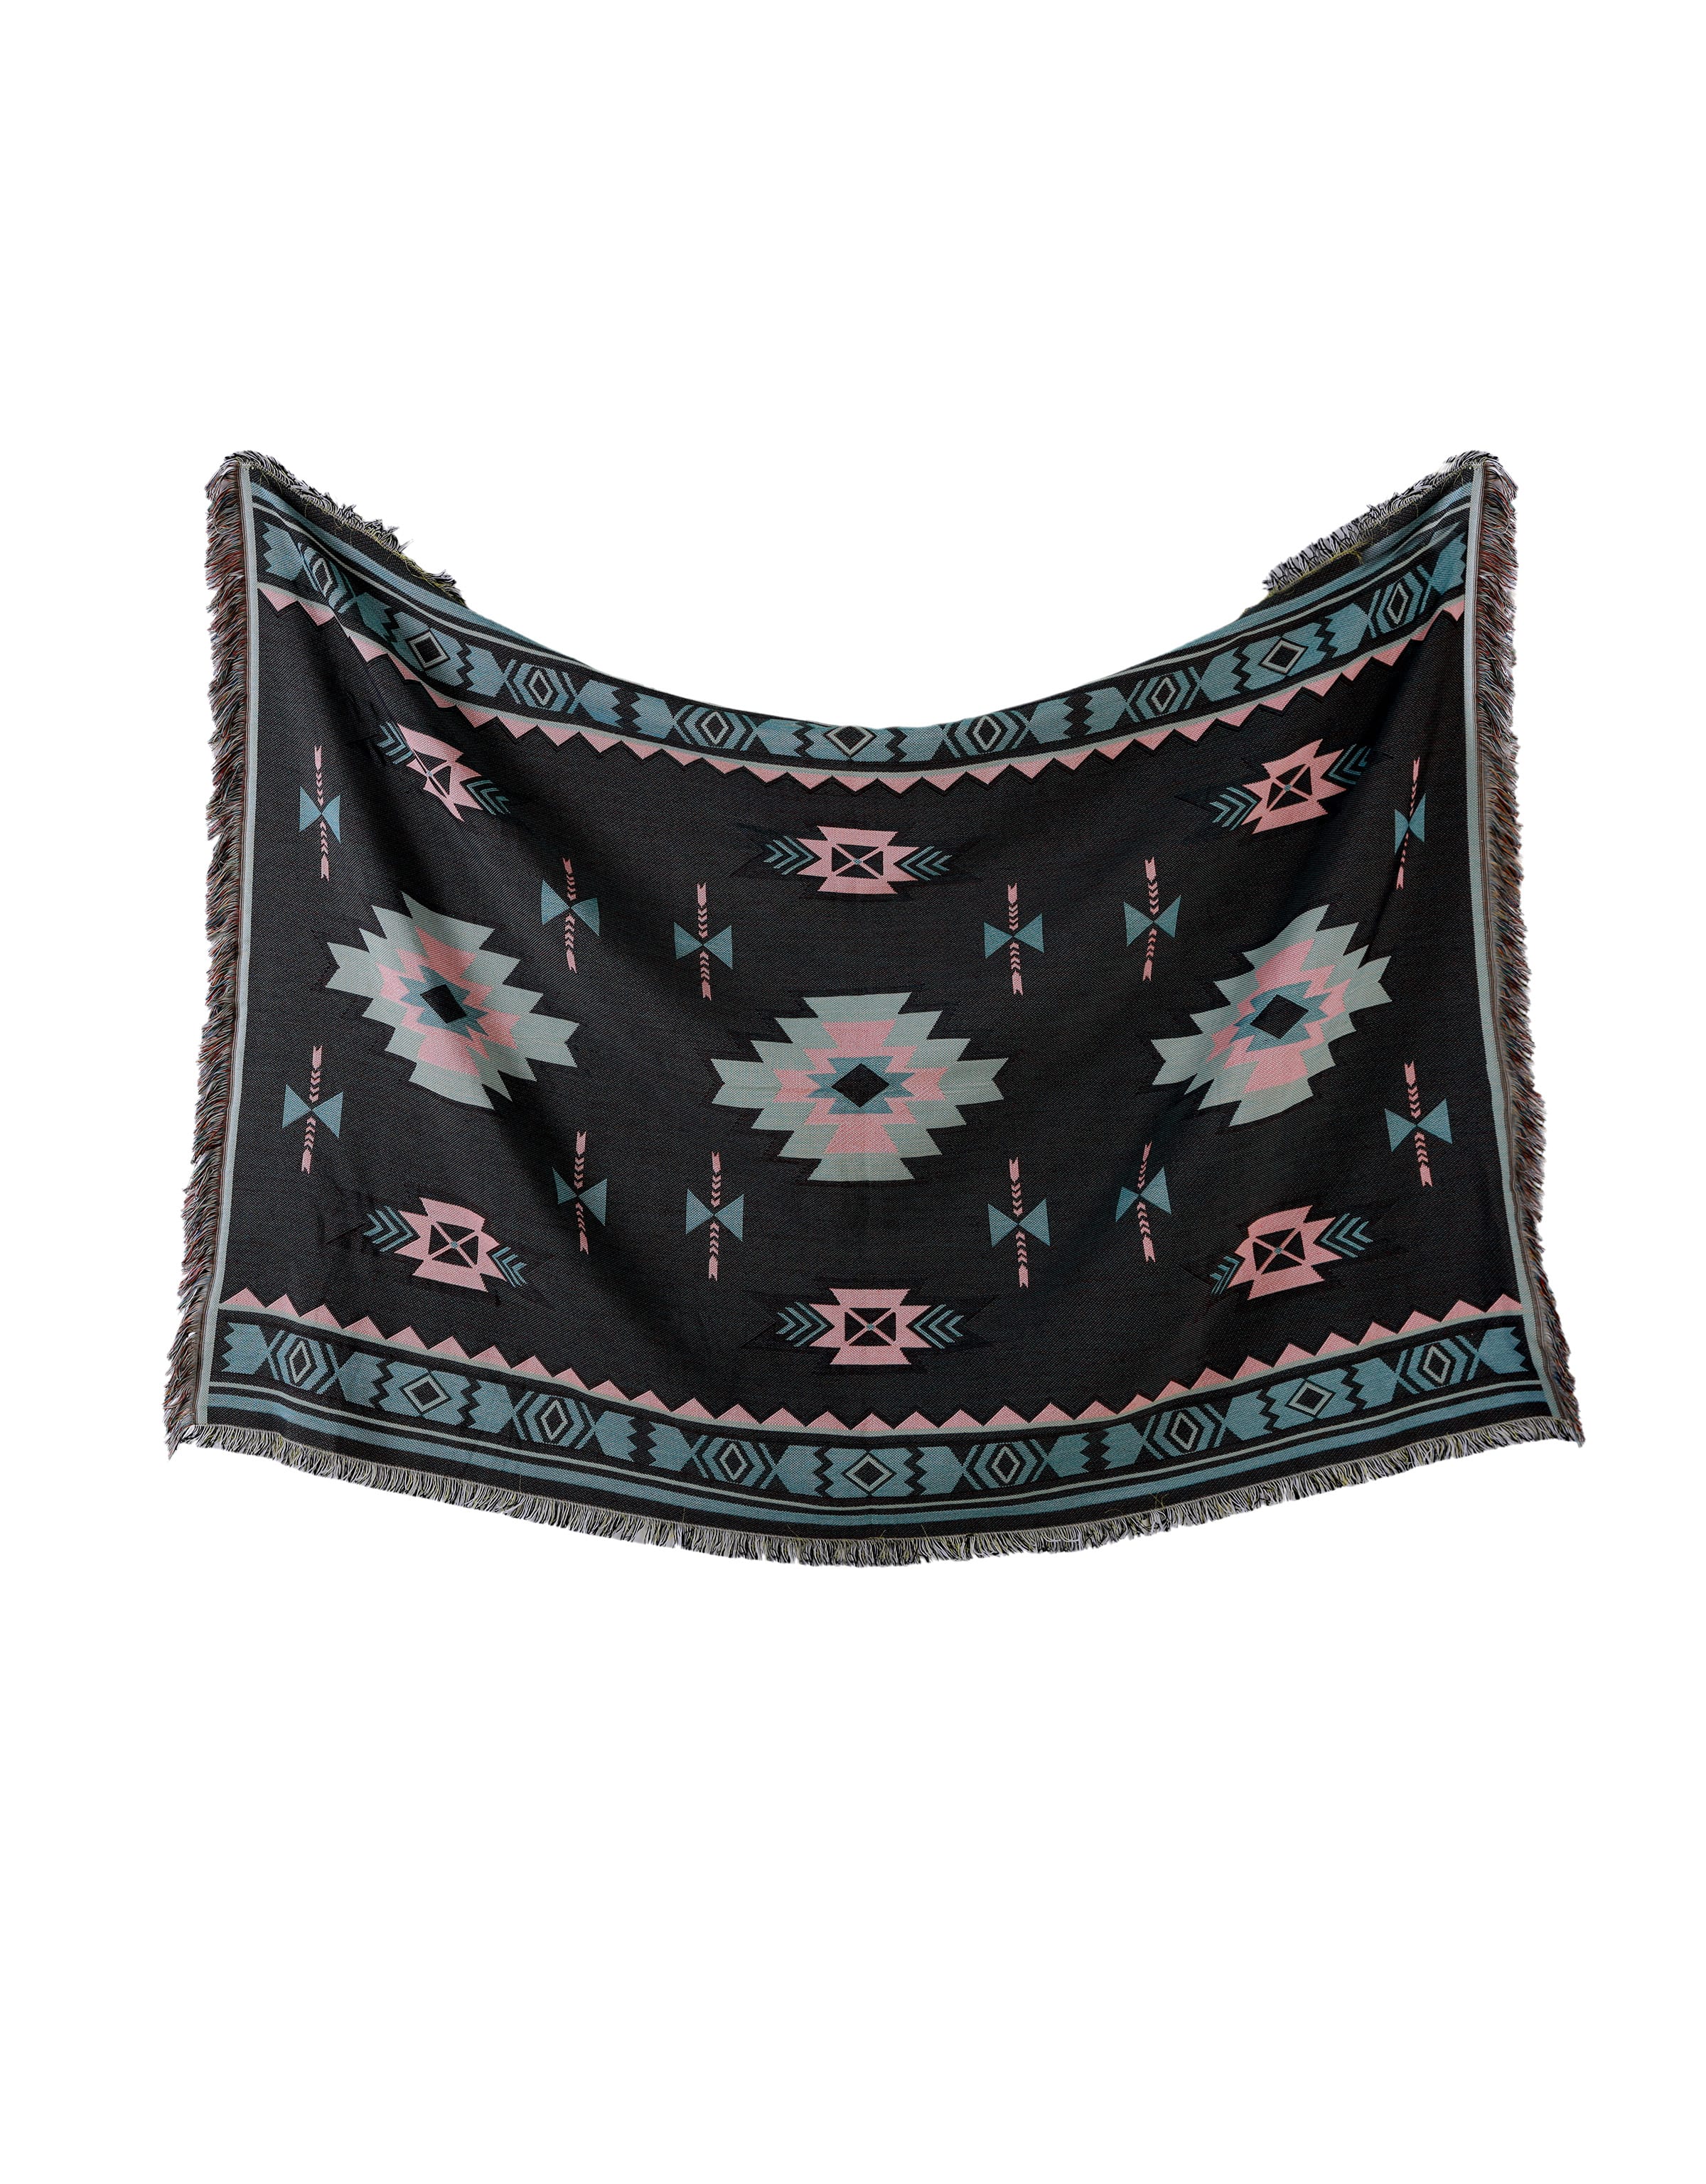 Aztec Indian Totem Sofa Blanket